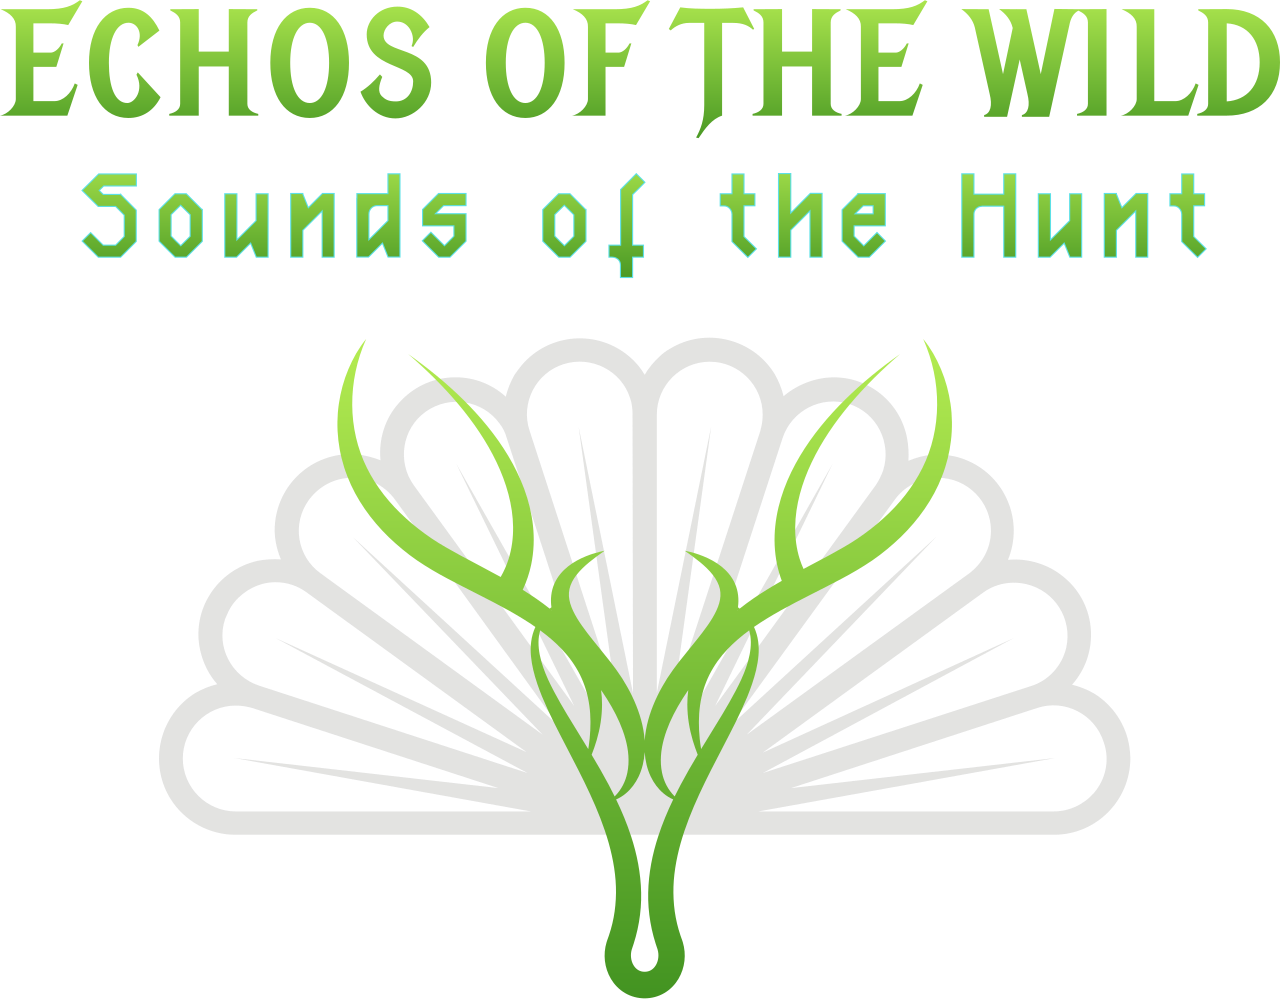 Echos of the Wild's logo